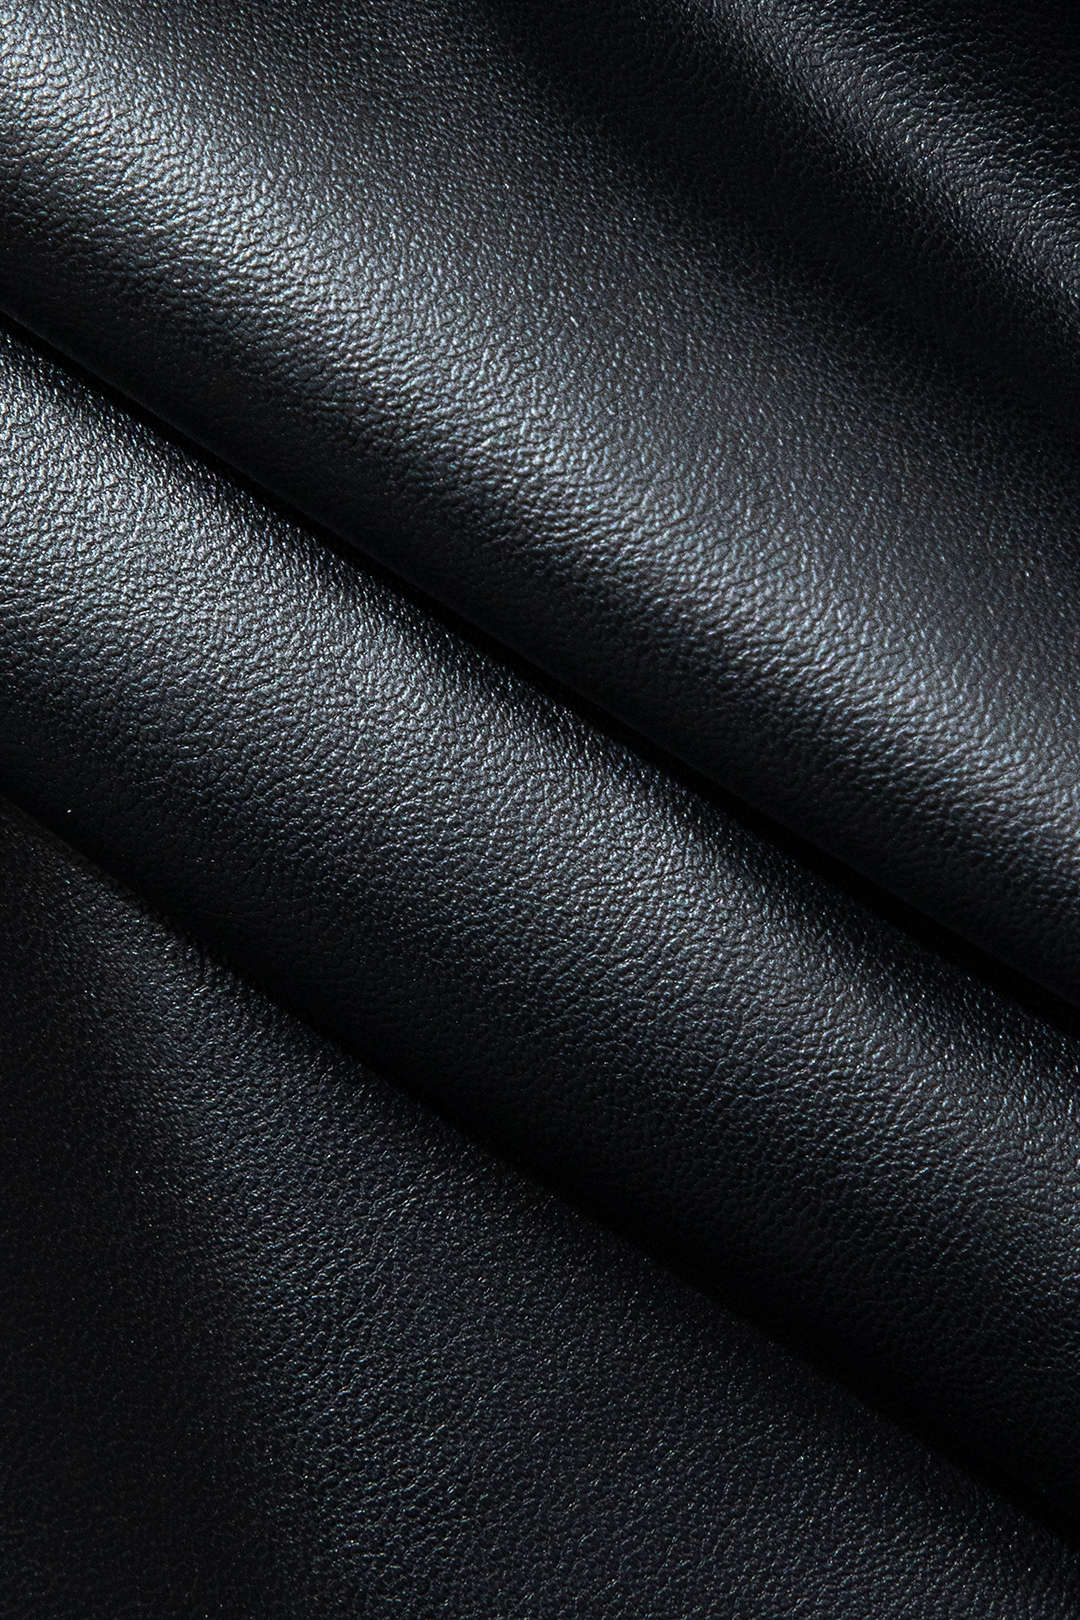 Faux Leather Asymmetric Ruched Corset Strapless Mini Dress